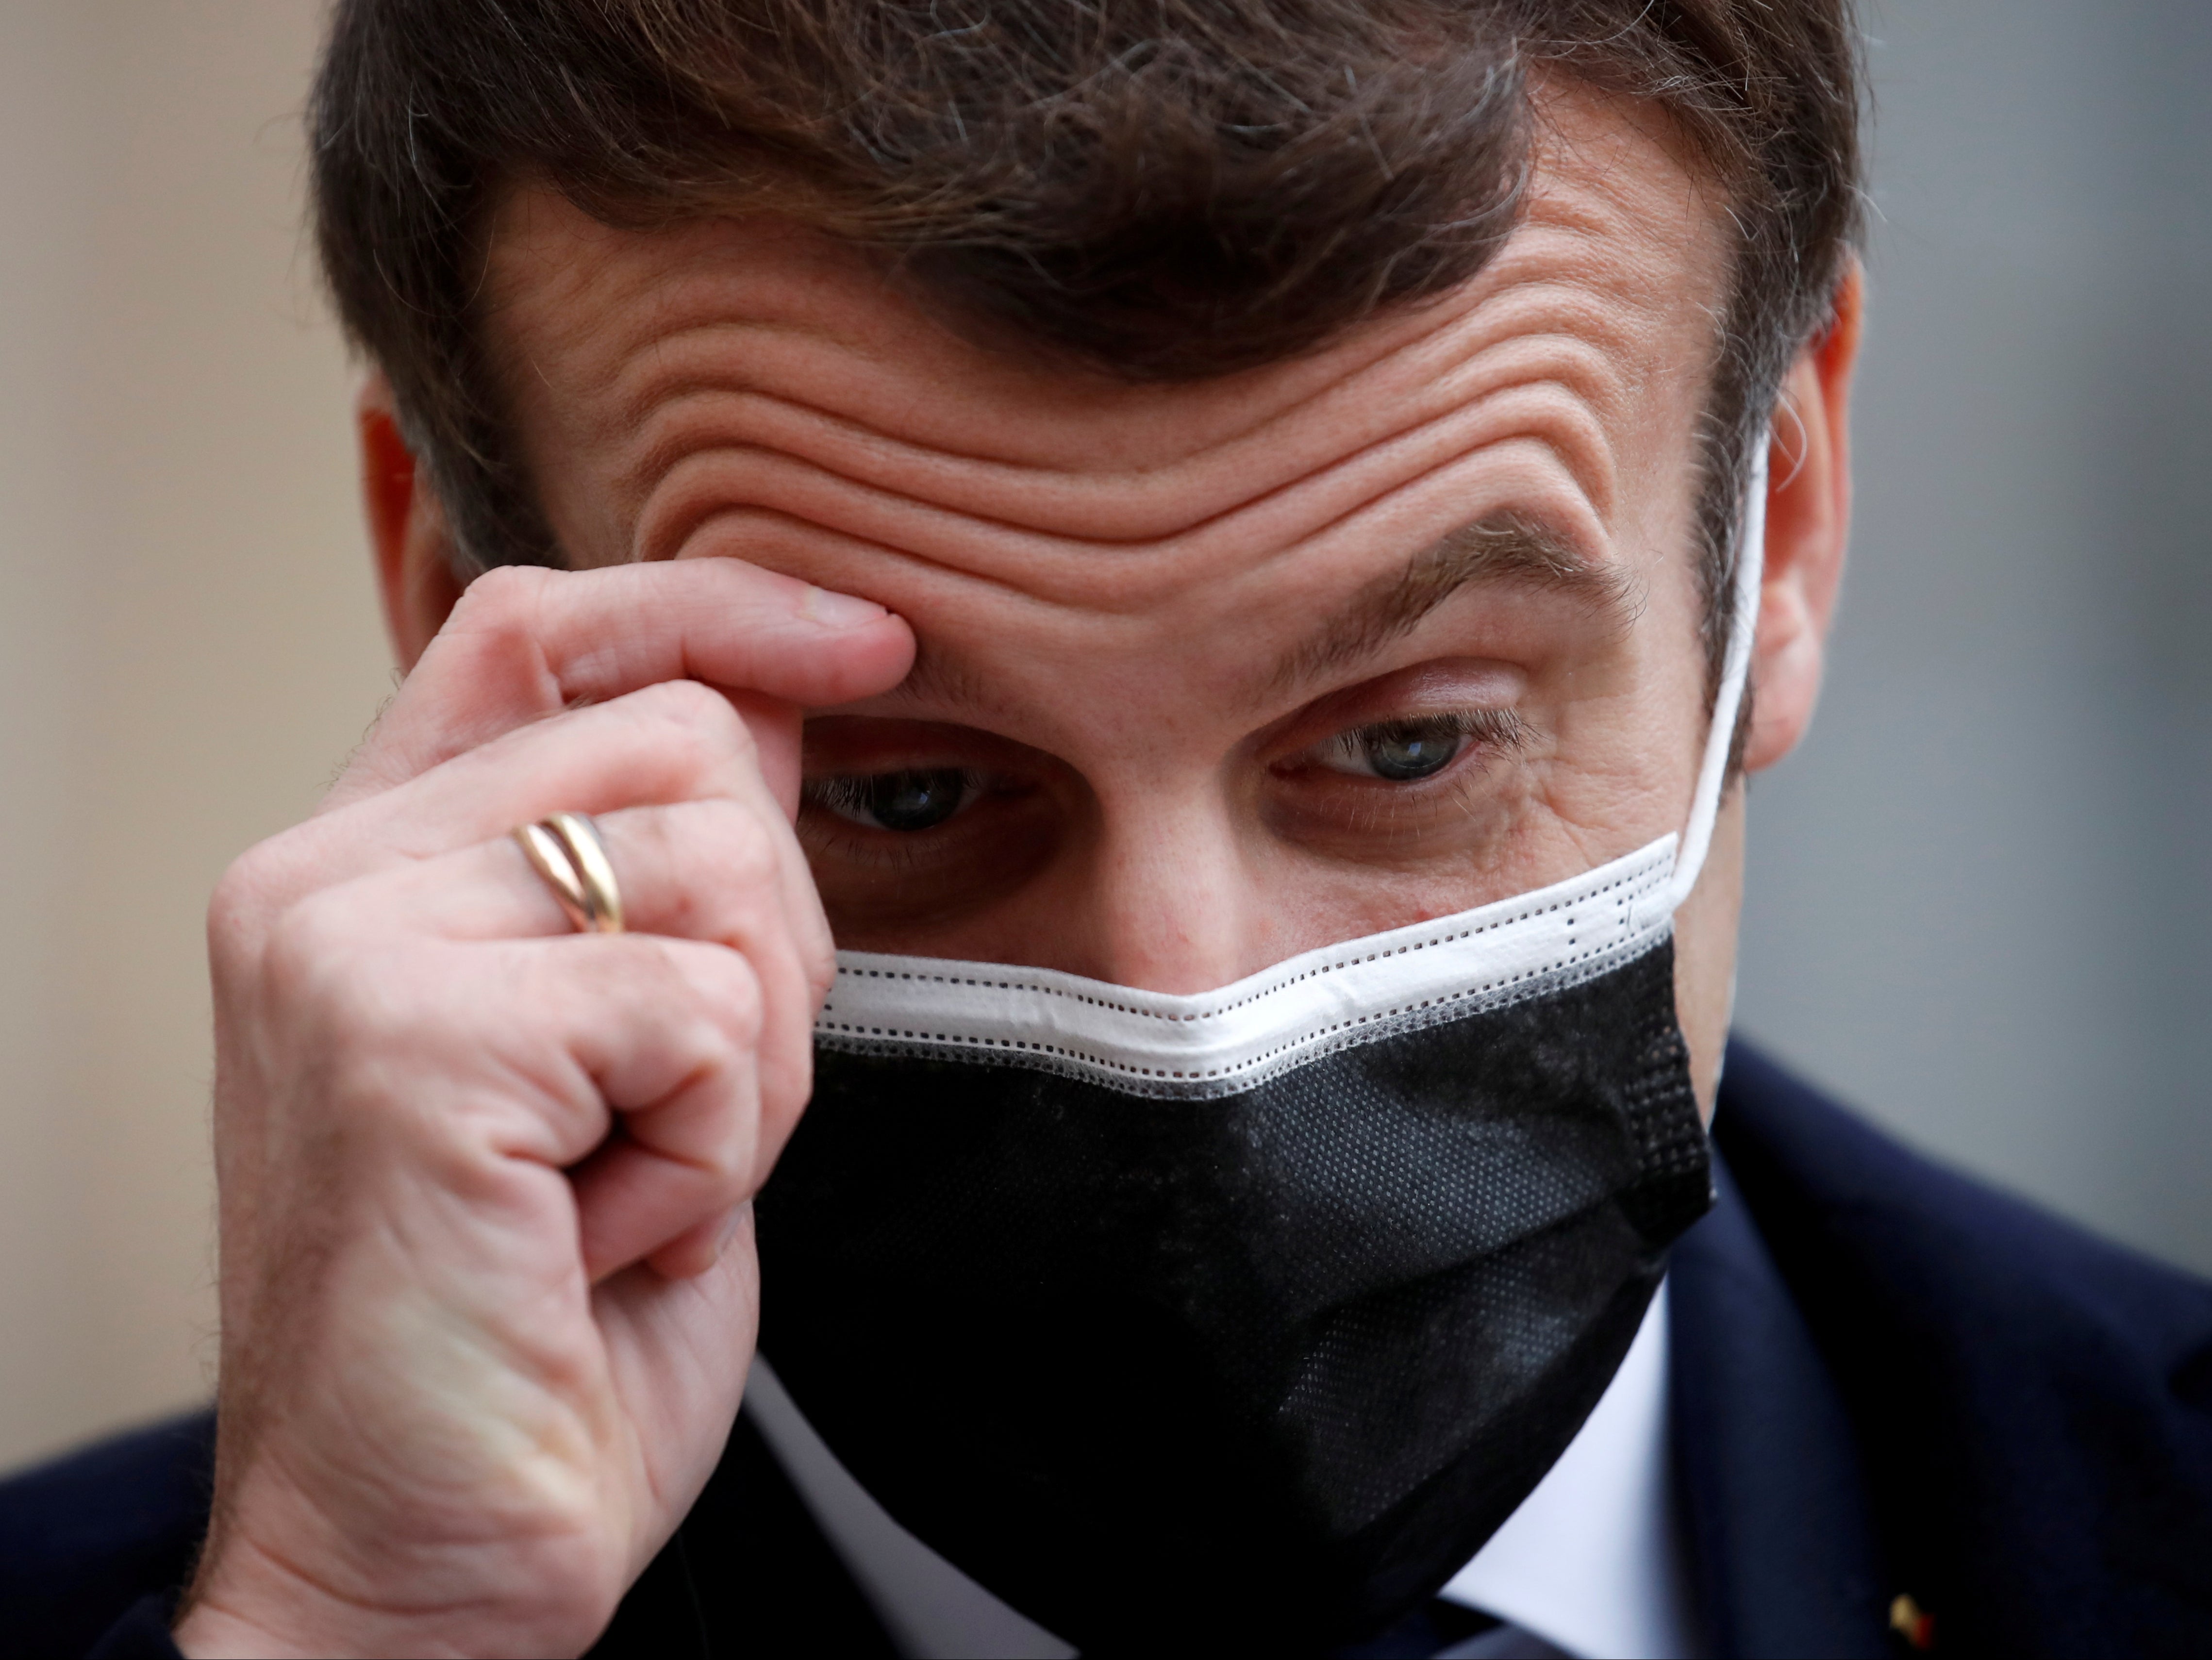 Macron sought a test on Thursday as soon as he began showing symptoms